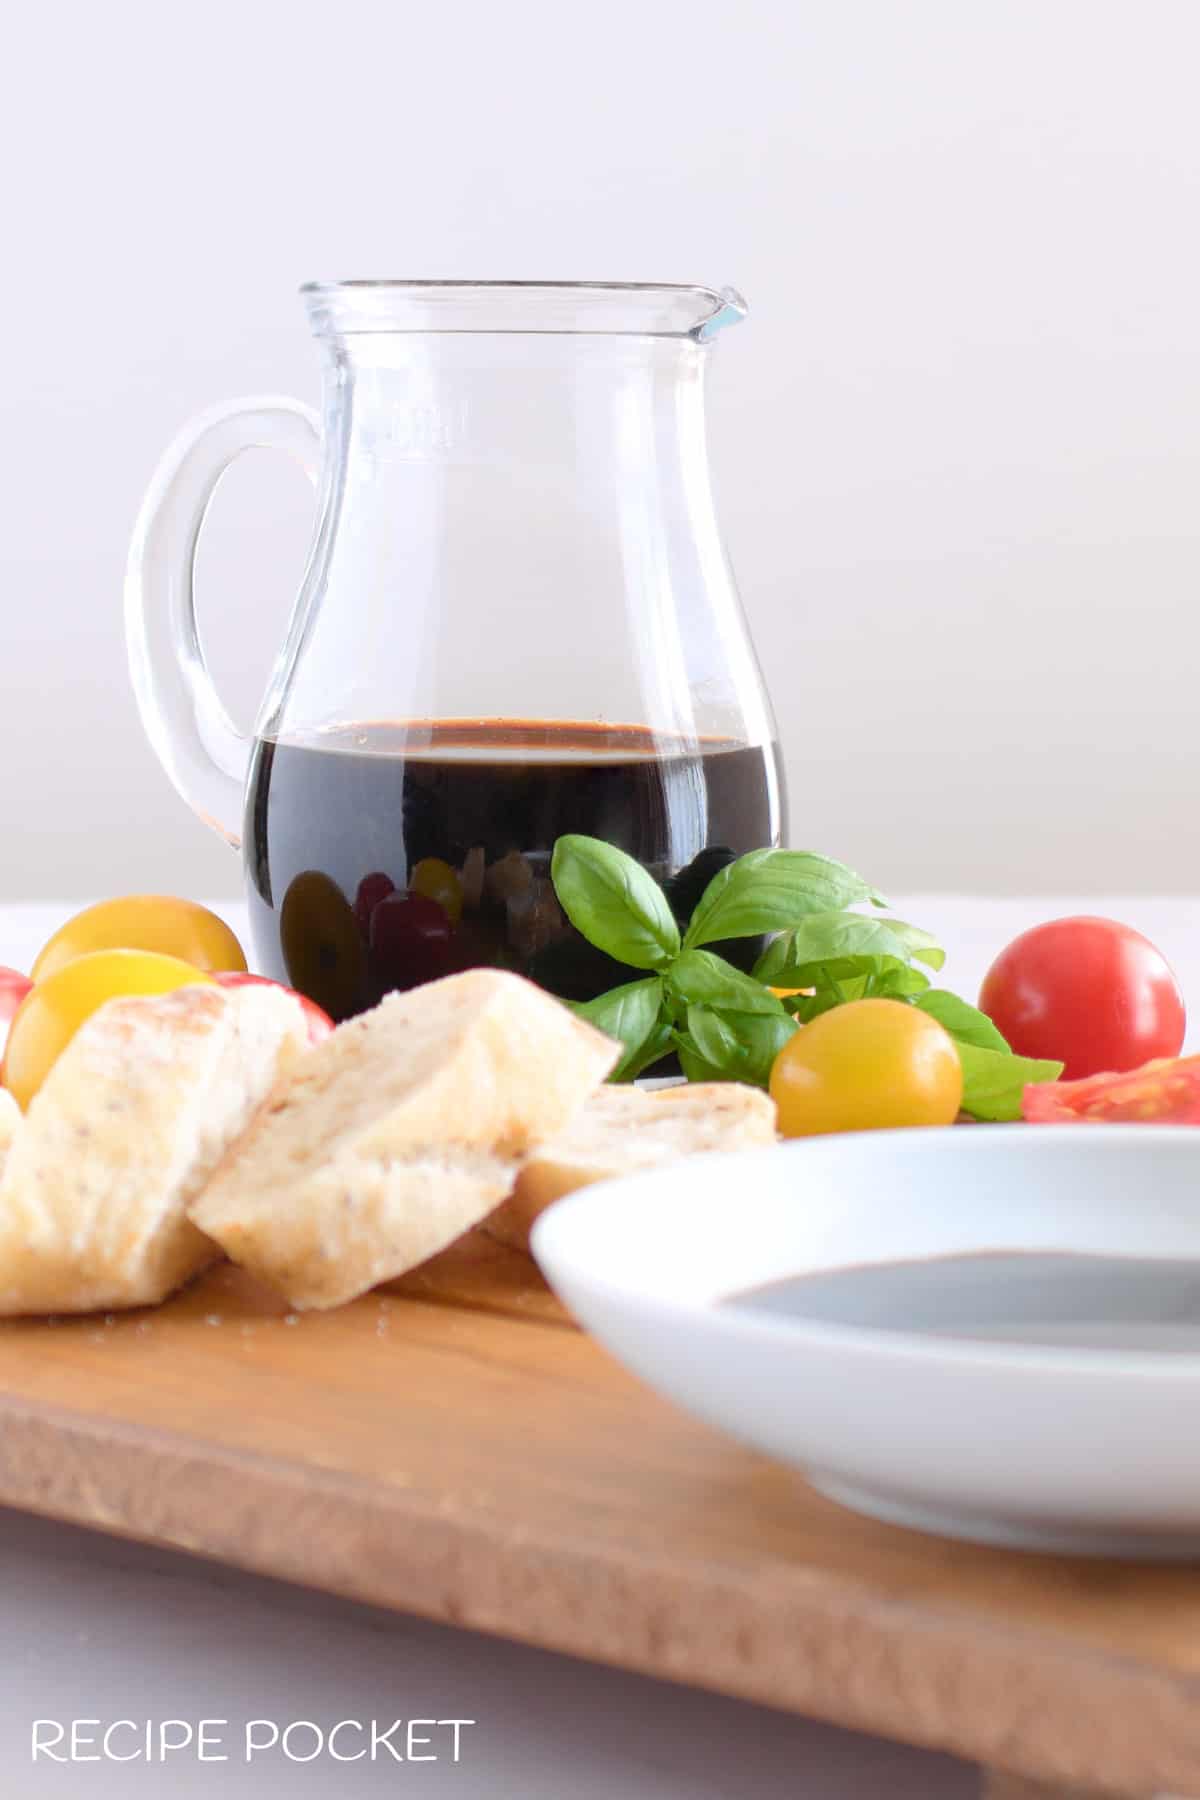 Balsamic vinegar dressing in a jug on a wooden board.